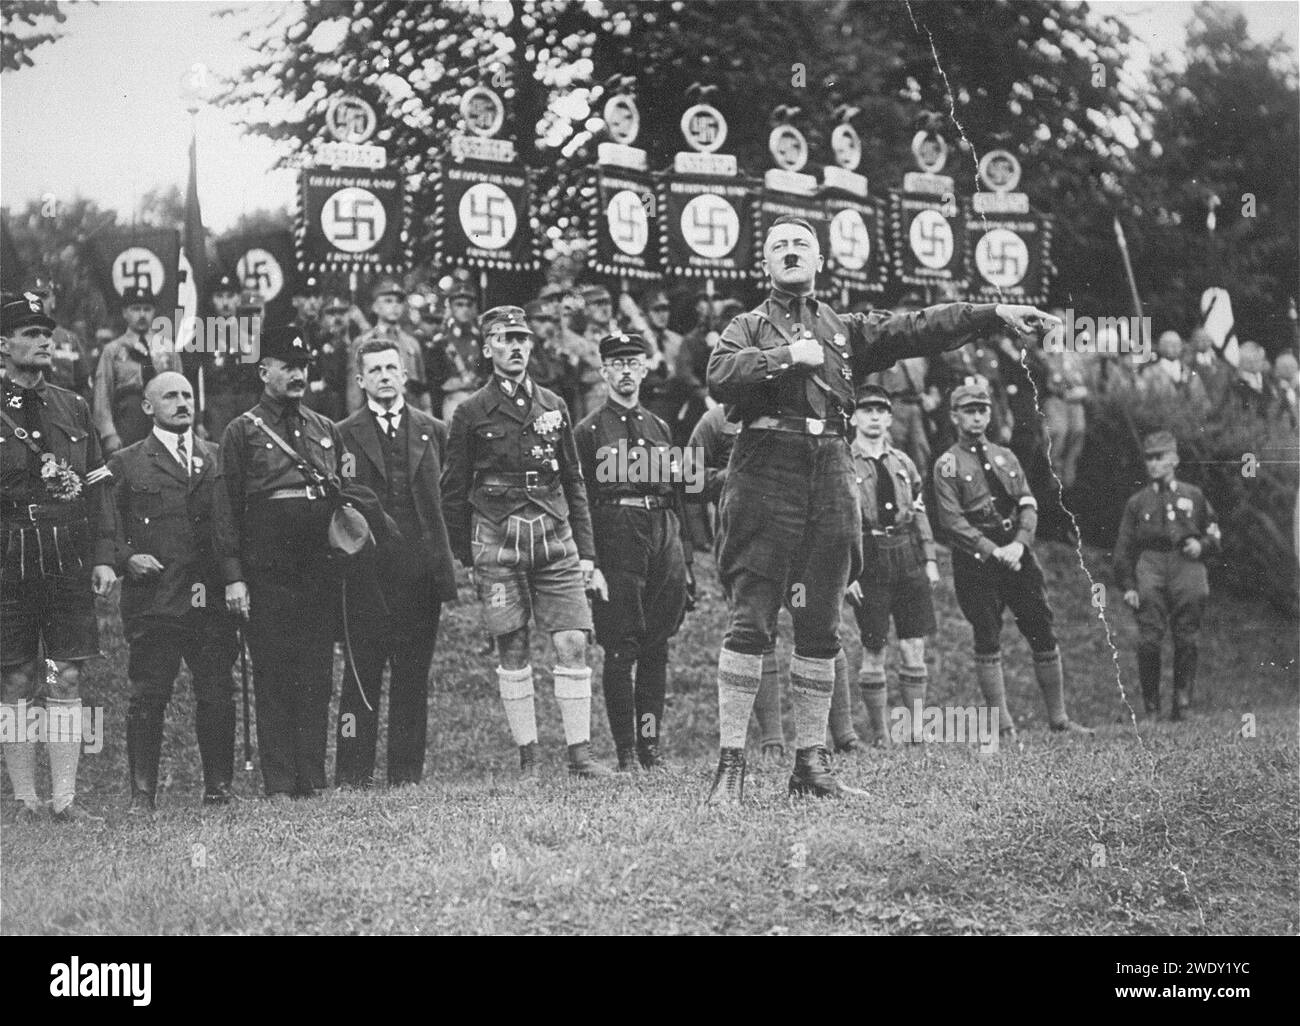 Adolf Hitler speech at Nuremberg Rally, 1927. Stock Photo